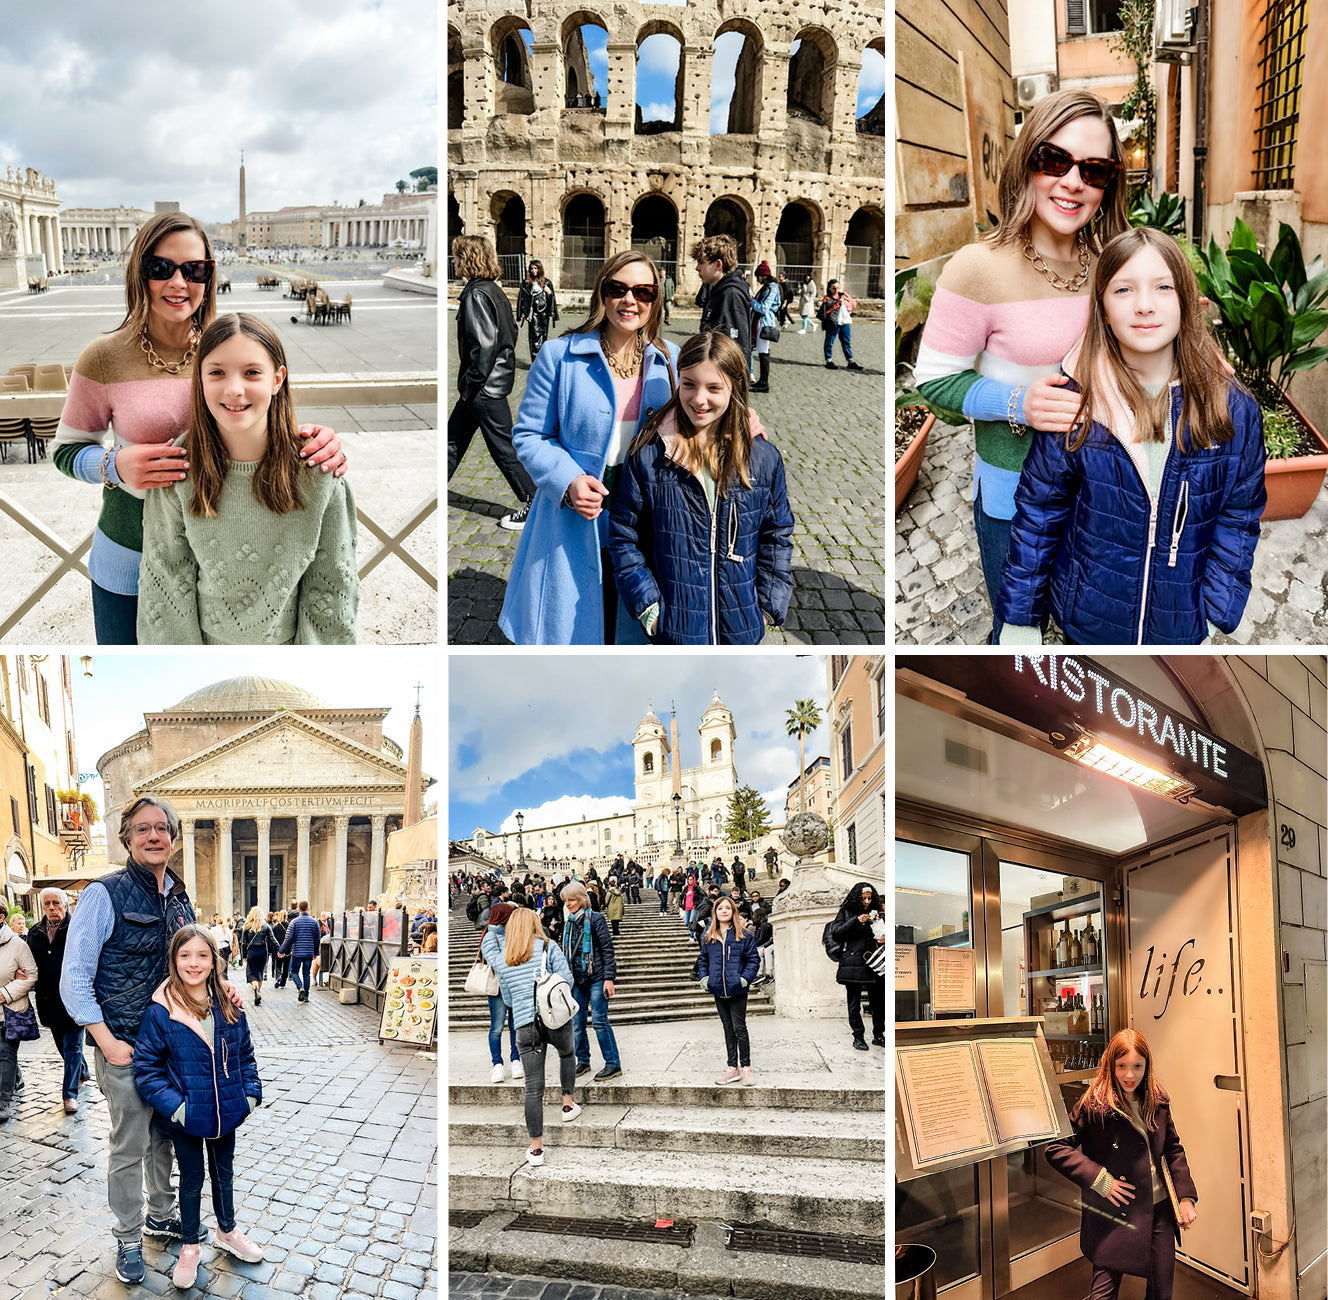 Rome - Day 2 - Vatican City, the Coliseum, Poldo e Gianna Osteria, the Pantheon, Spanish Steps, Life Ristorante